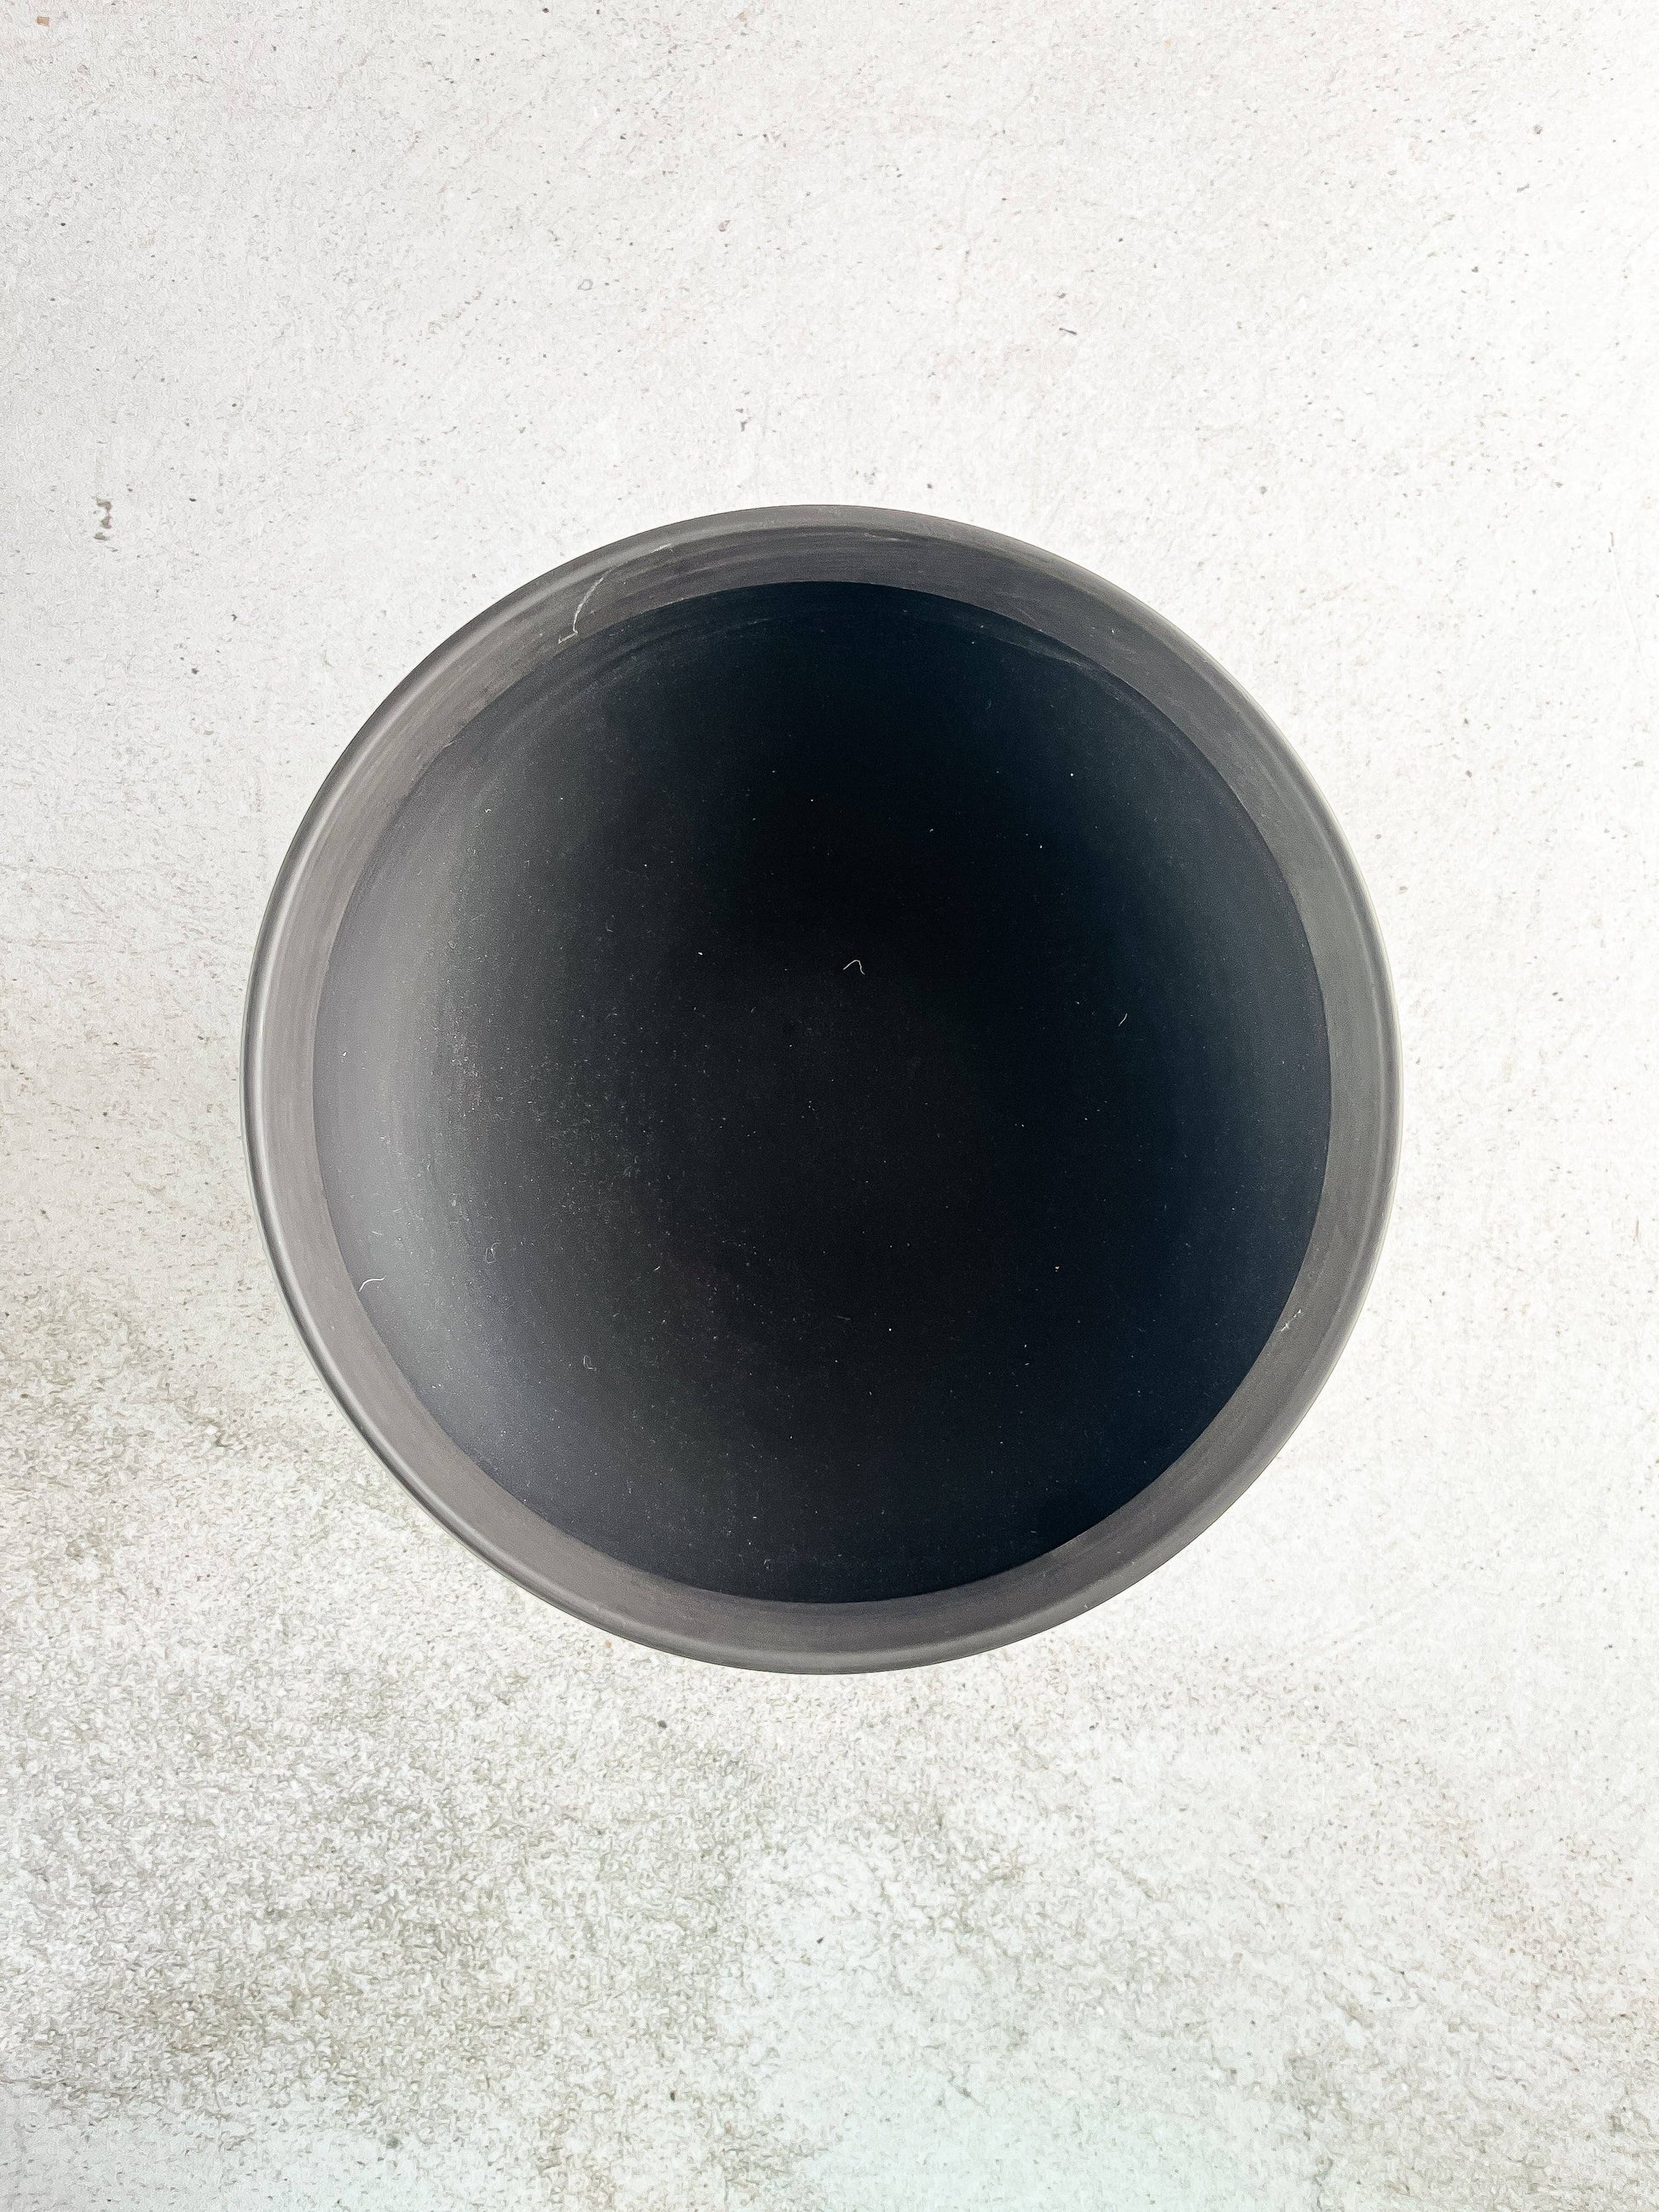 Rare Wedgwood Jasperware Black Round Footed Imperial Bowl - 'Sacrifice Scene' Design - SOSC Home